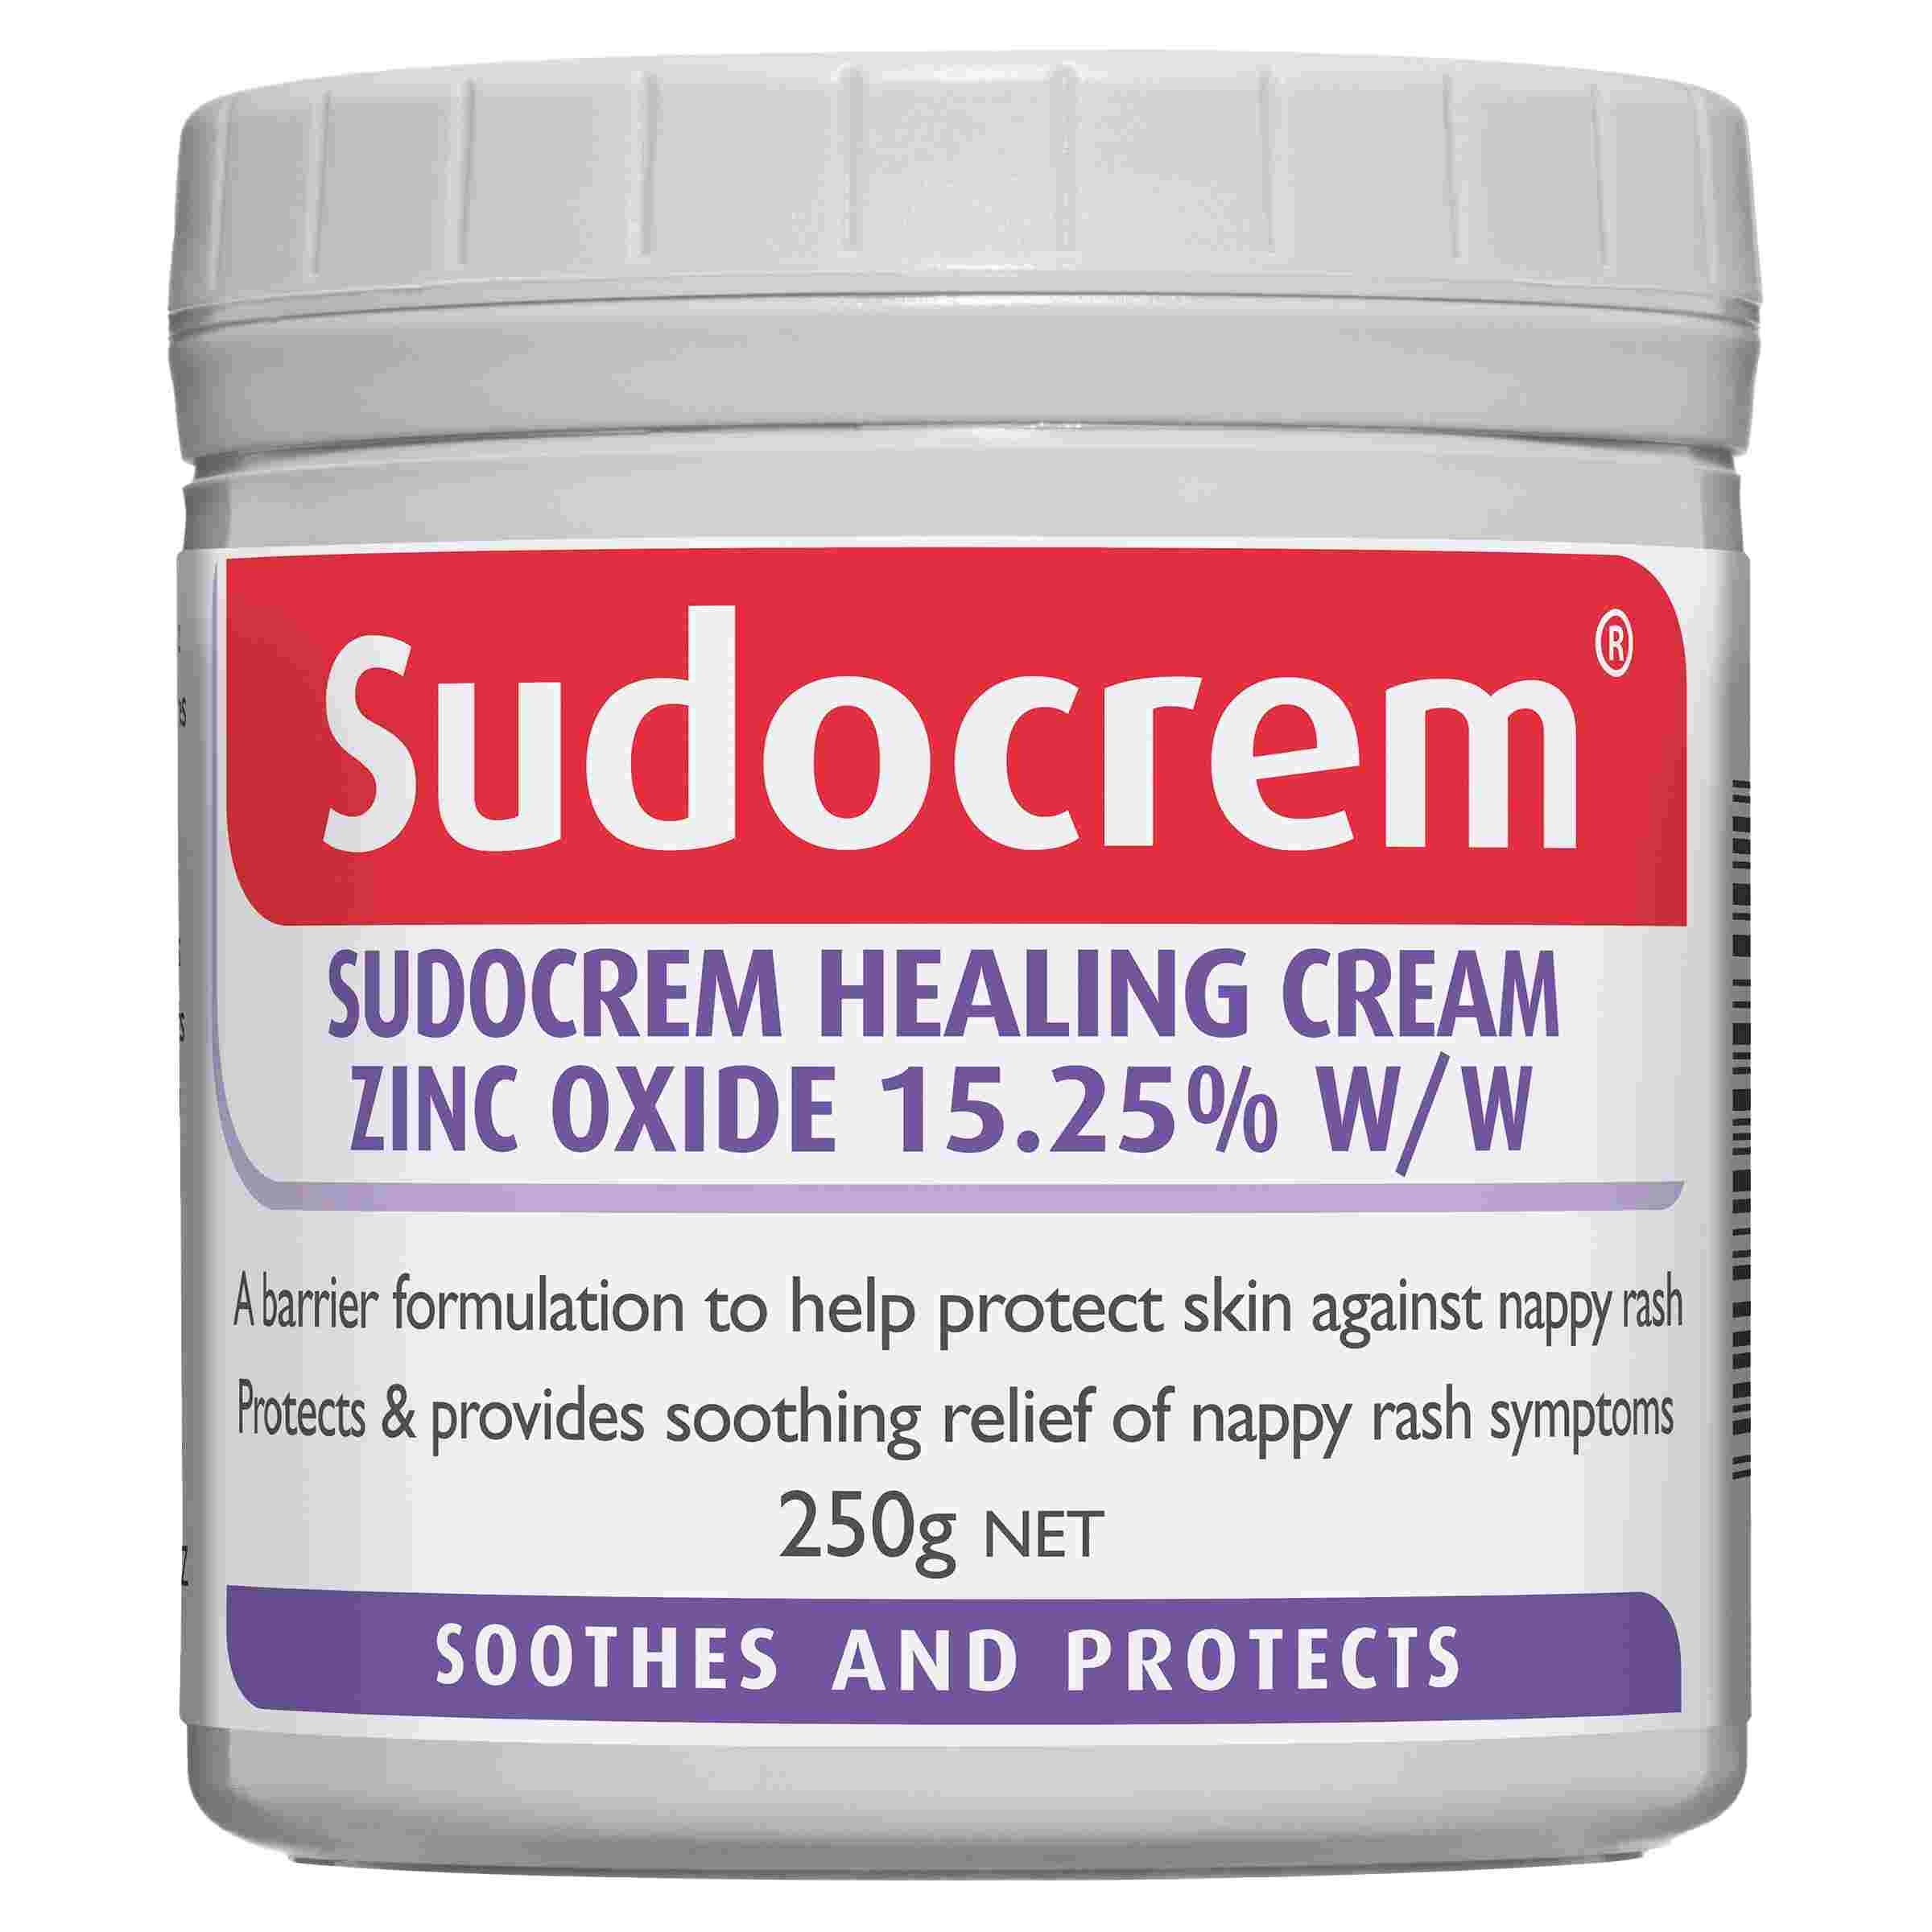 Sudocrem nappy cream review